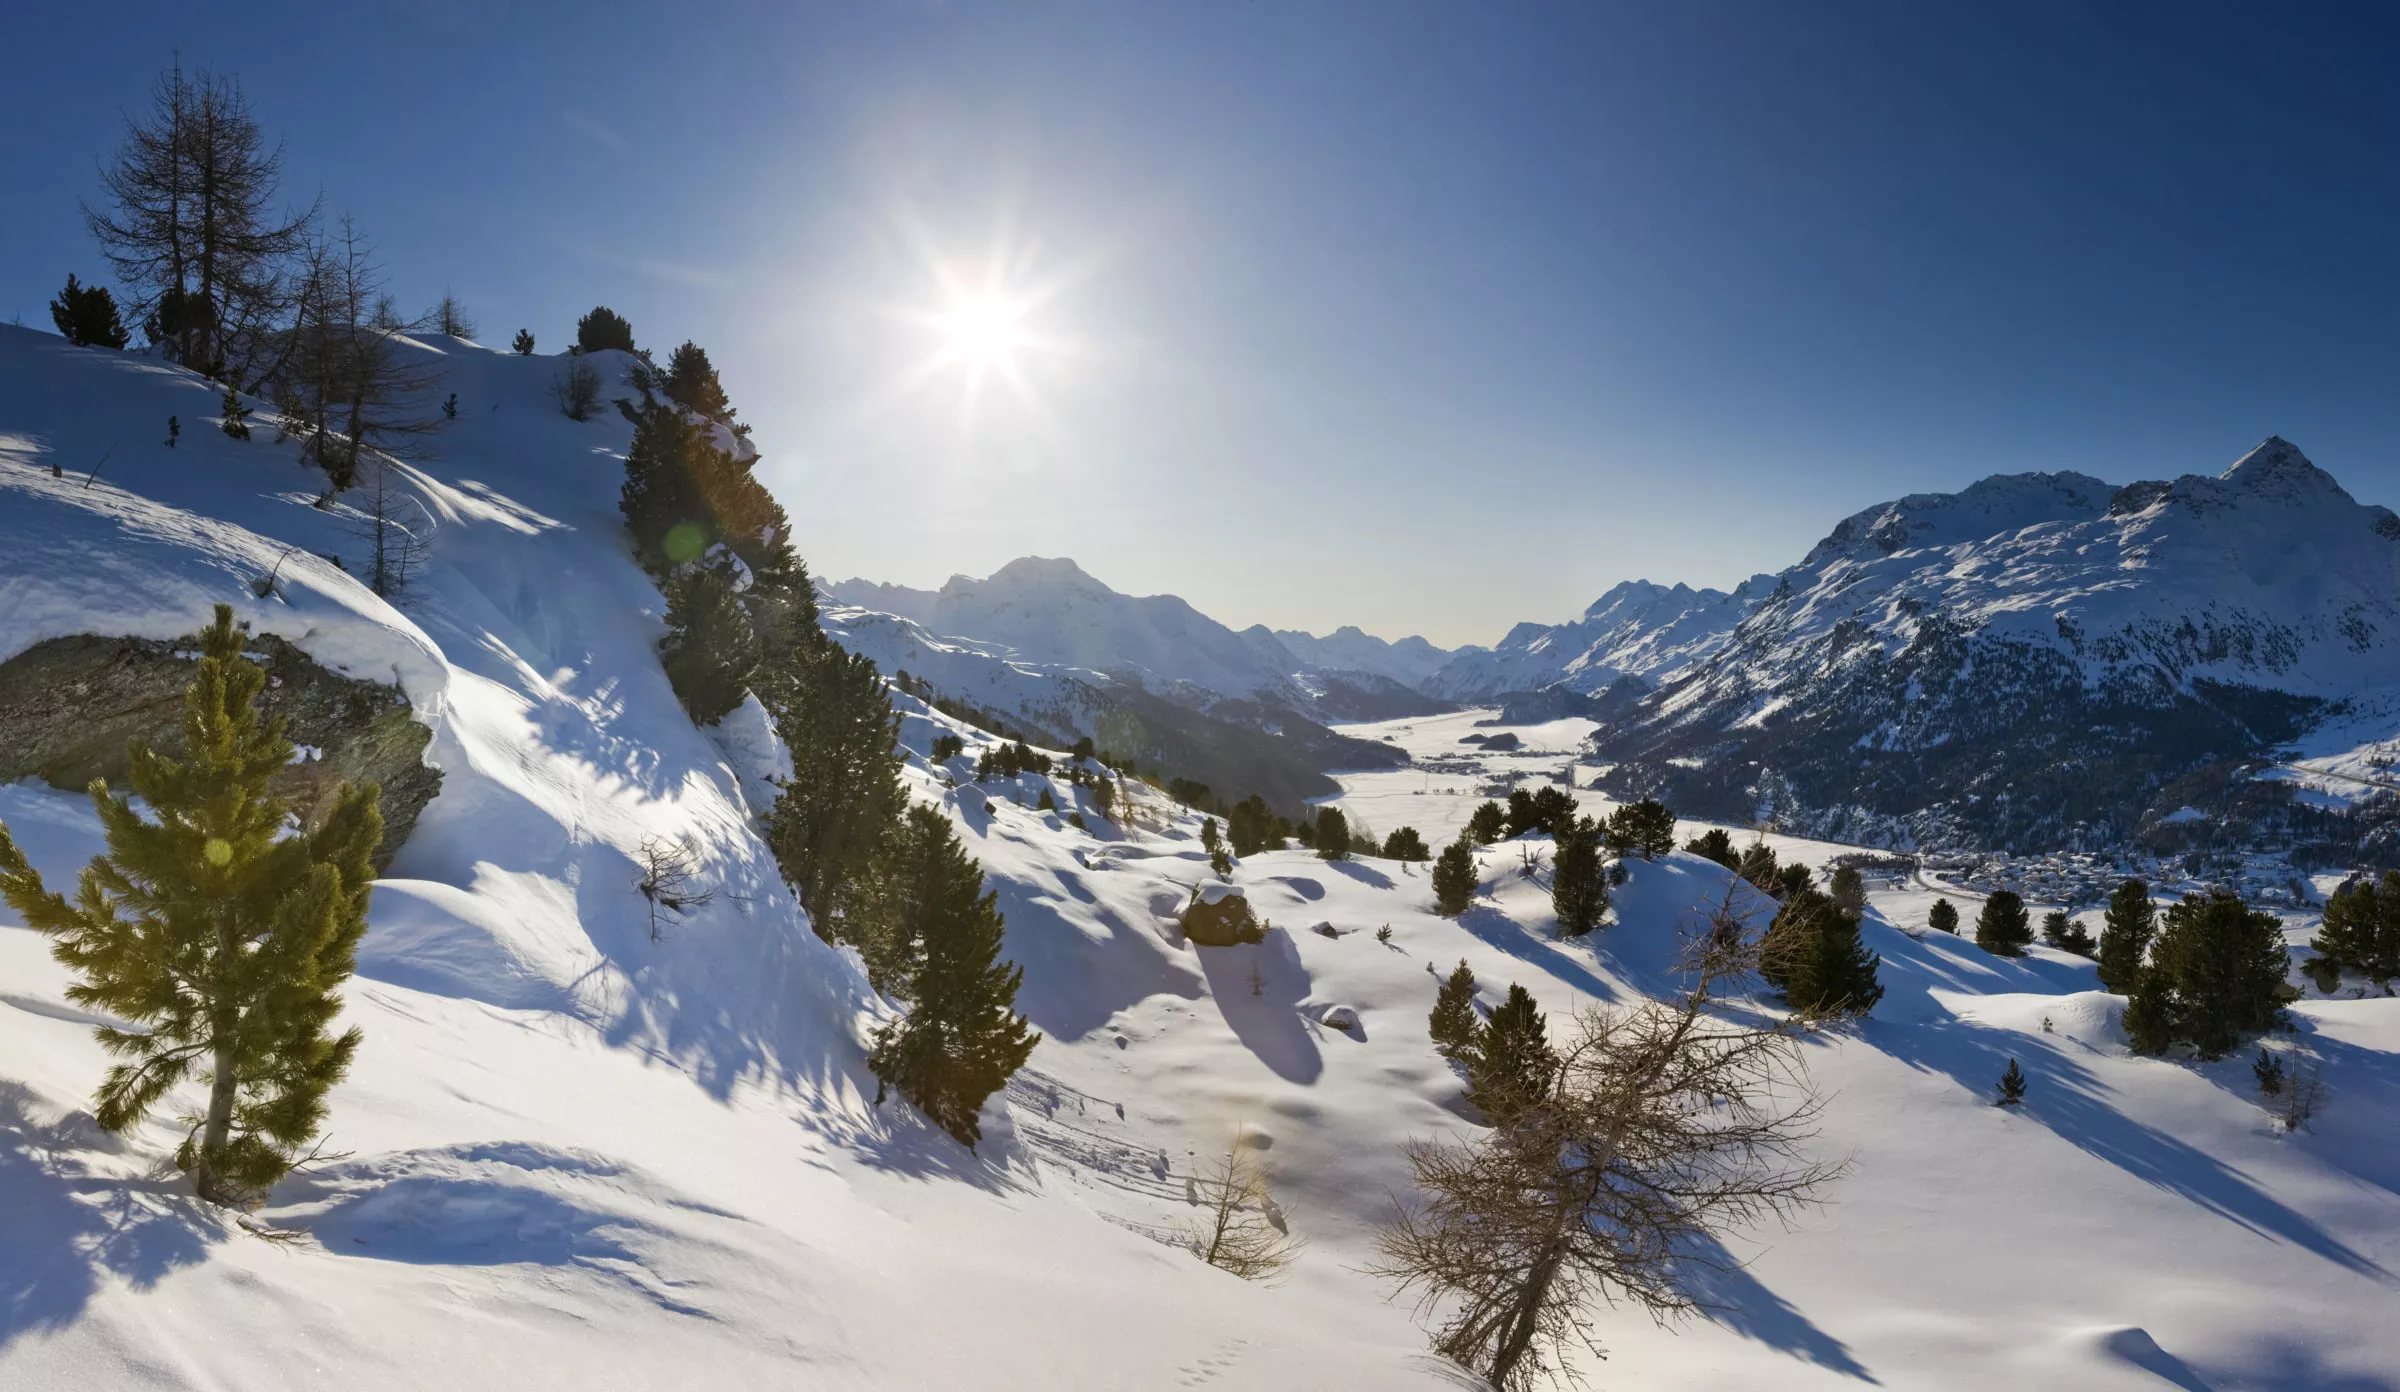 Engadin St. Moritz Mountains in Switzerland, Europe | Snowboarding,Skiing - Rated 3.7